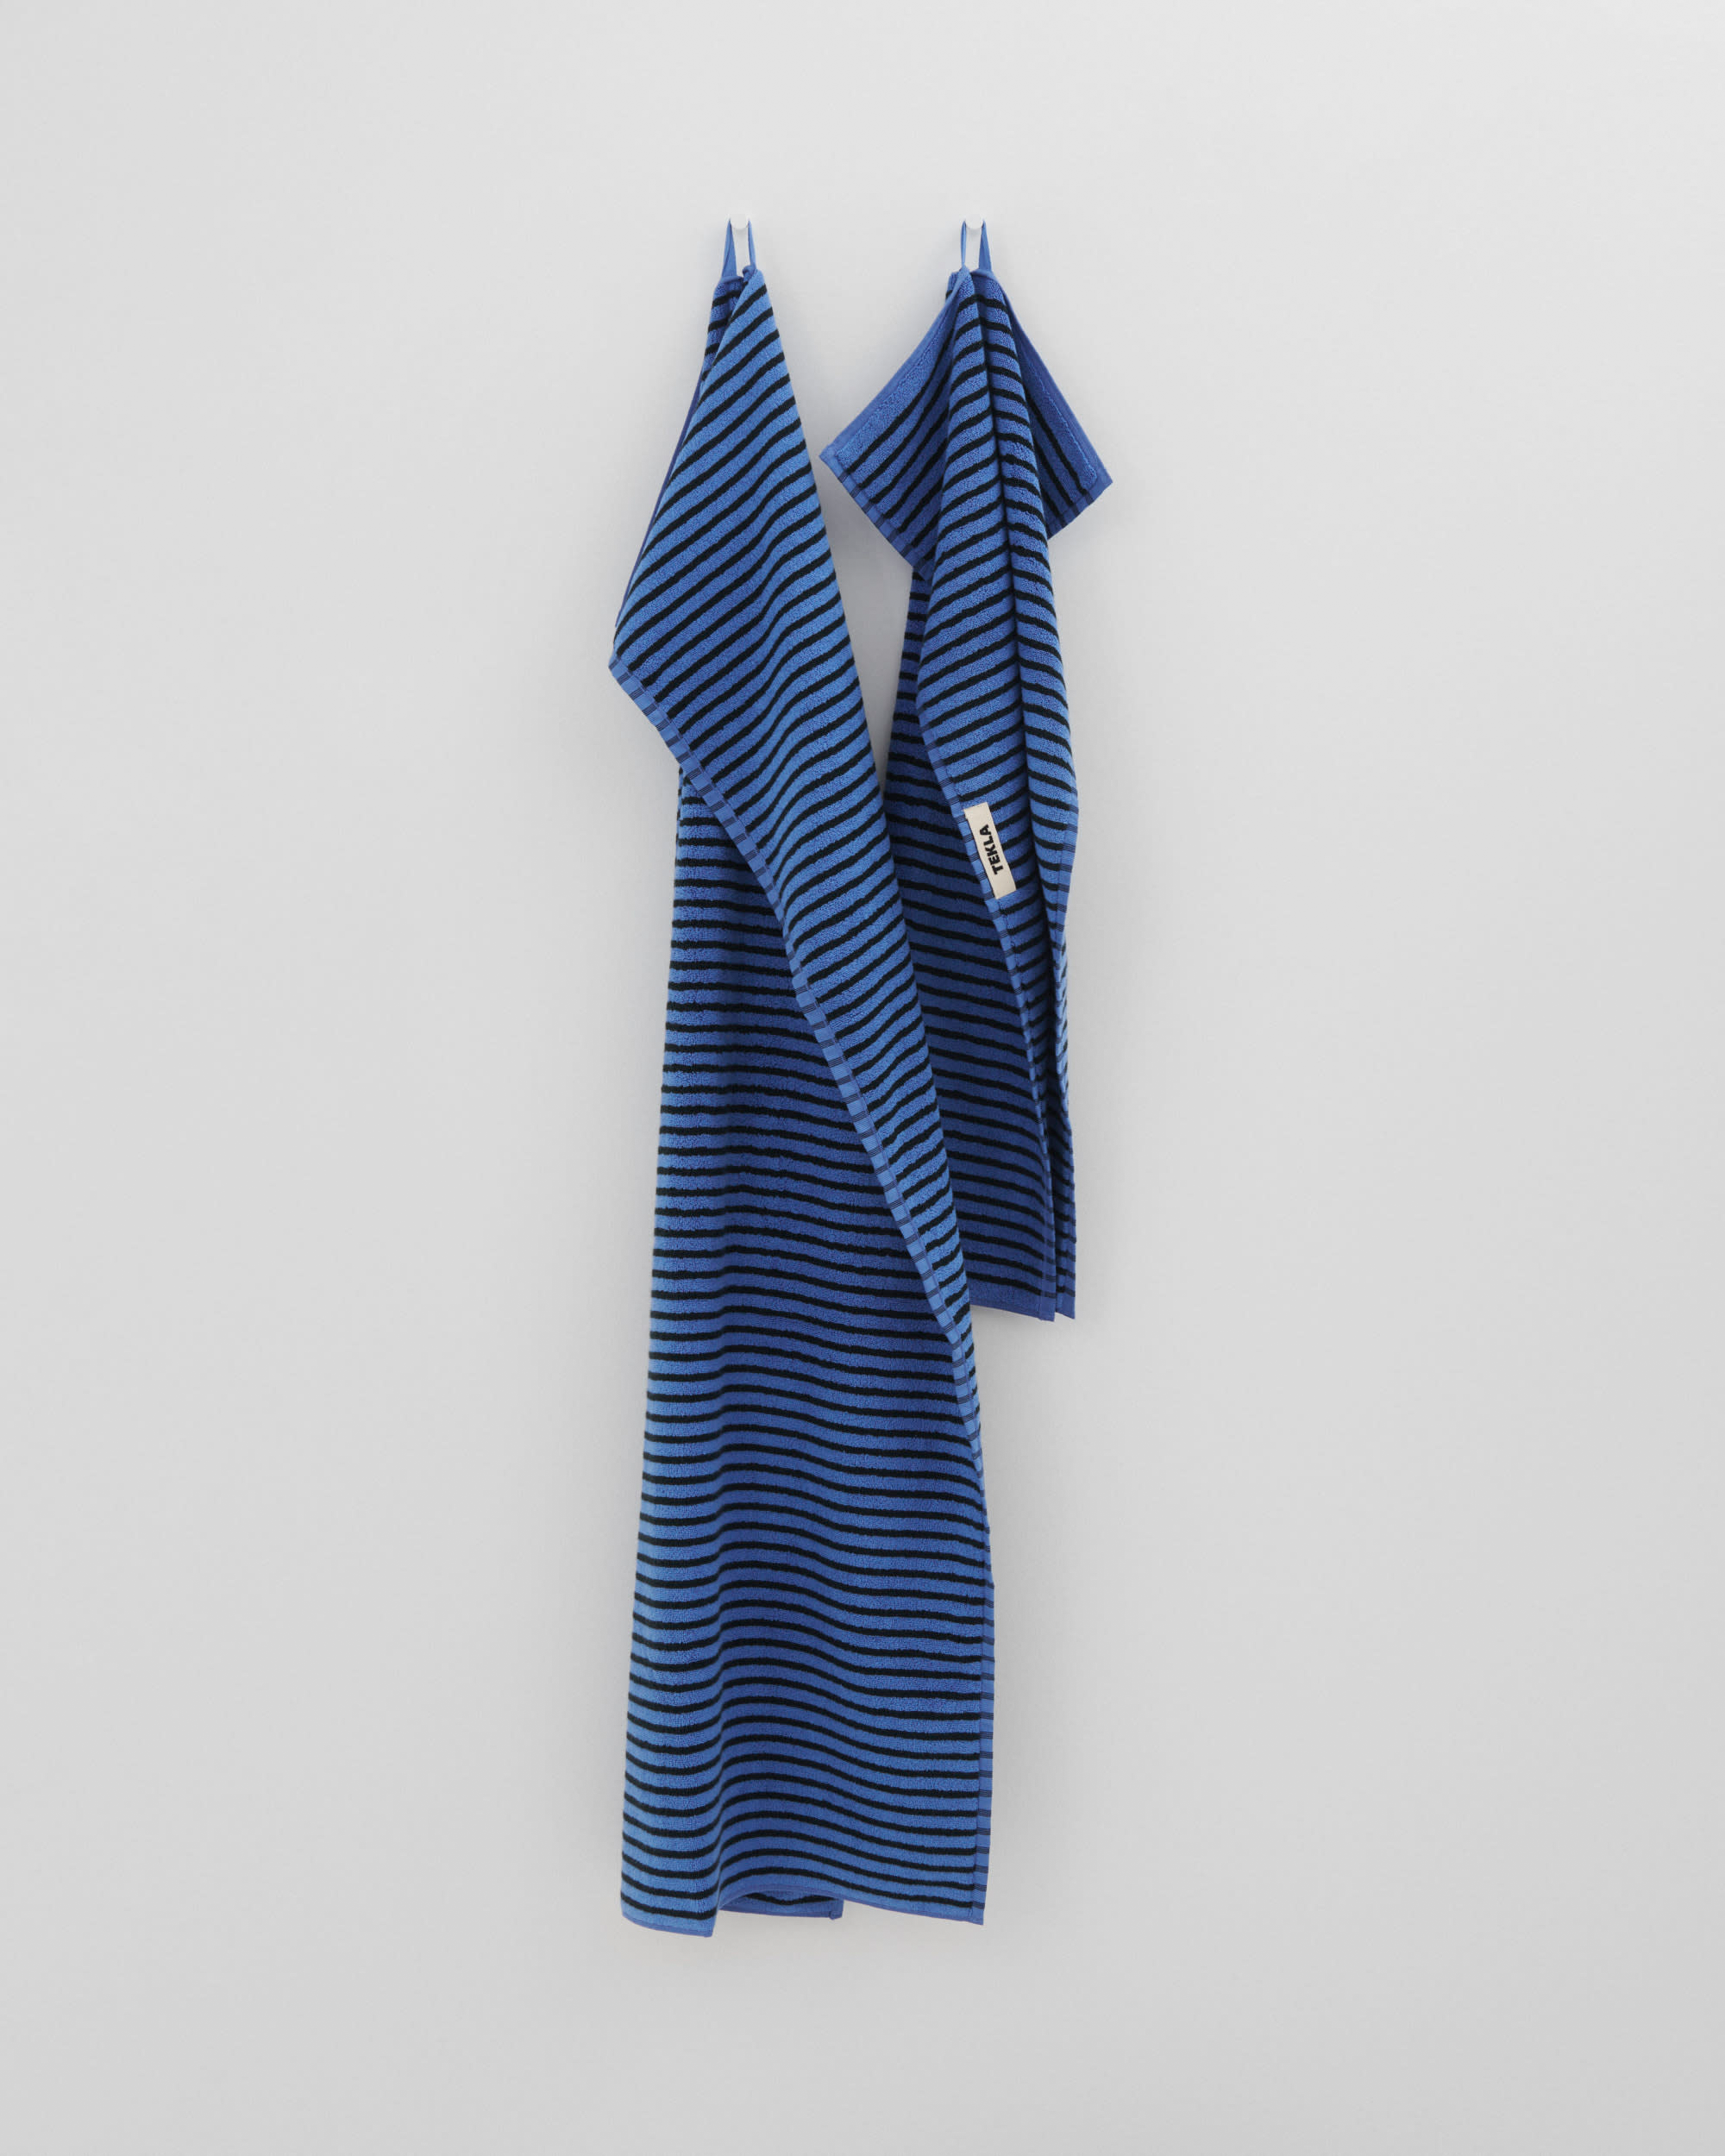 Bath Towel (Striped) - Blue / Black